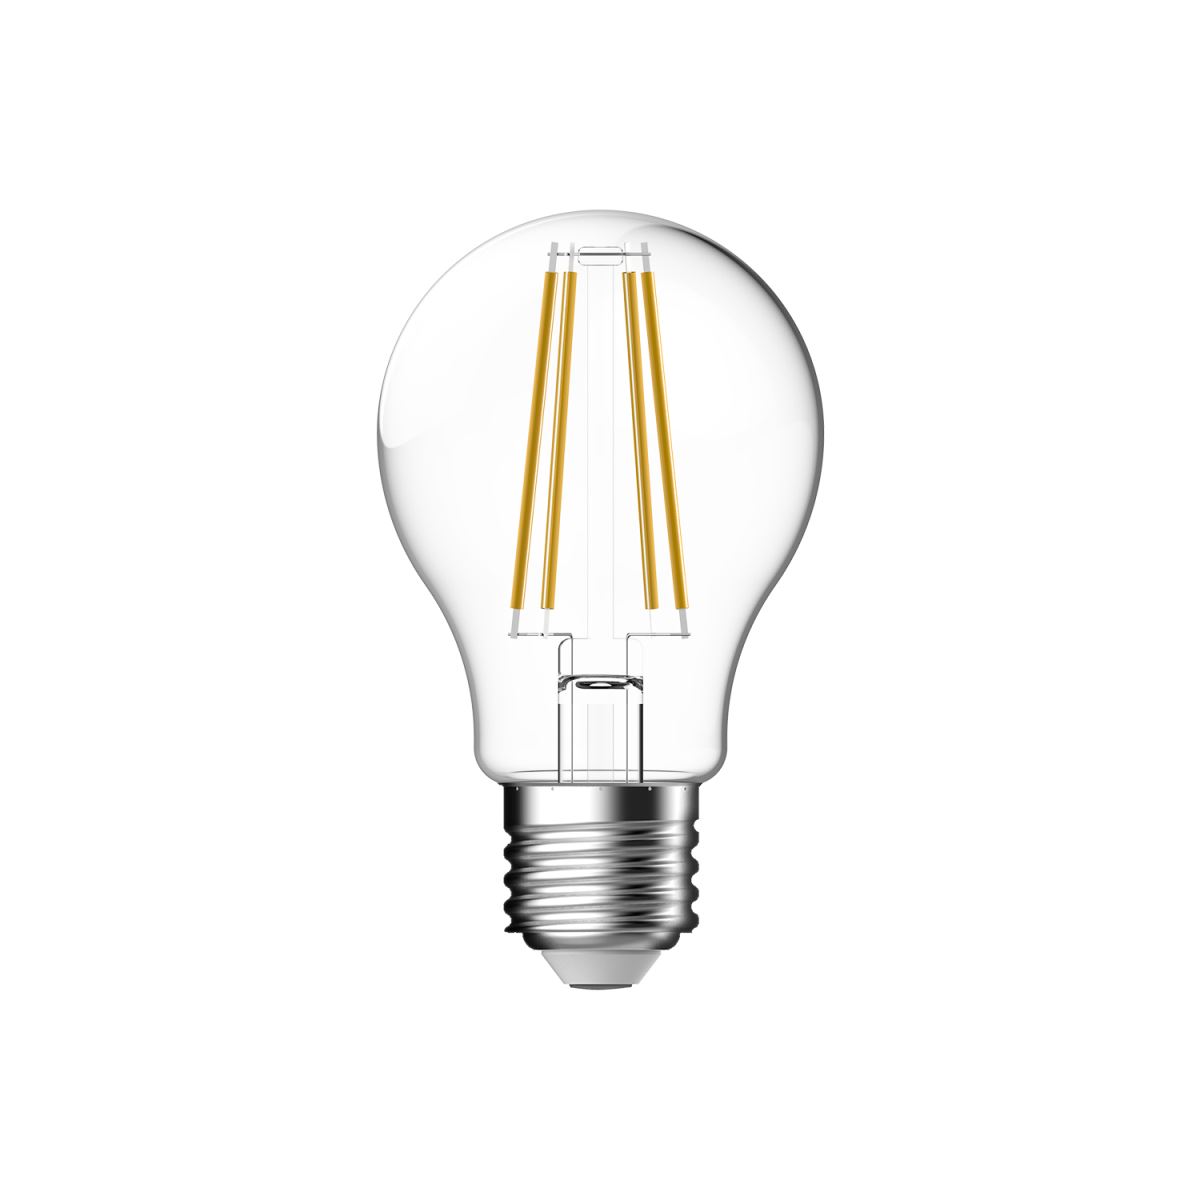 Nordlux Energetic LED Leuchtmittel E27 A60 Filament klar 1055lm 4000K 8,2W 80Ra 360° 6x6x10,4cm von Energetic